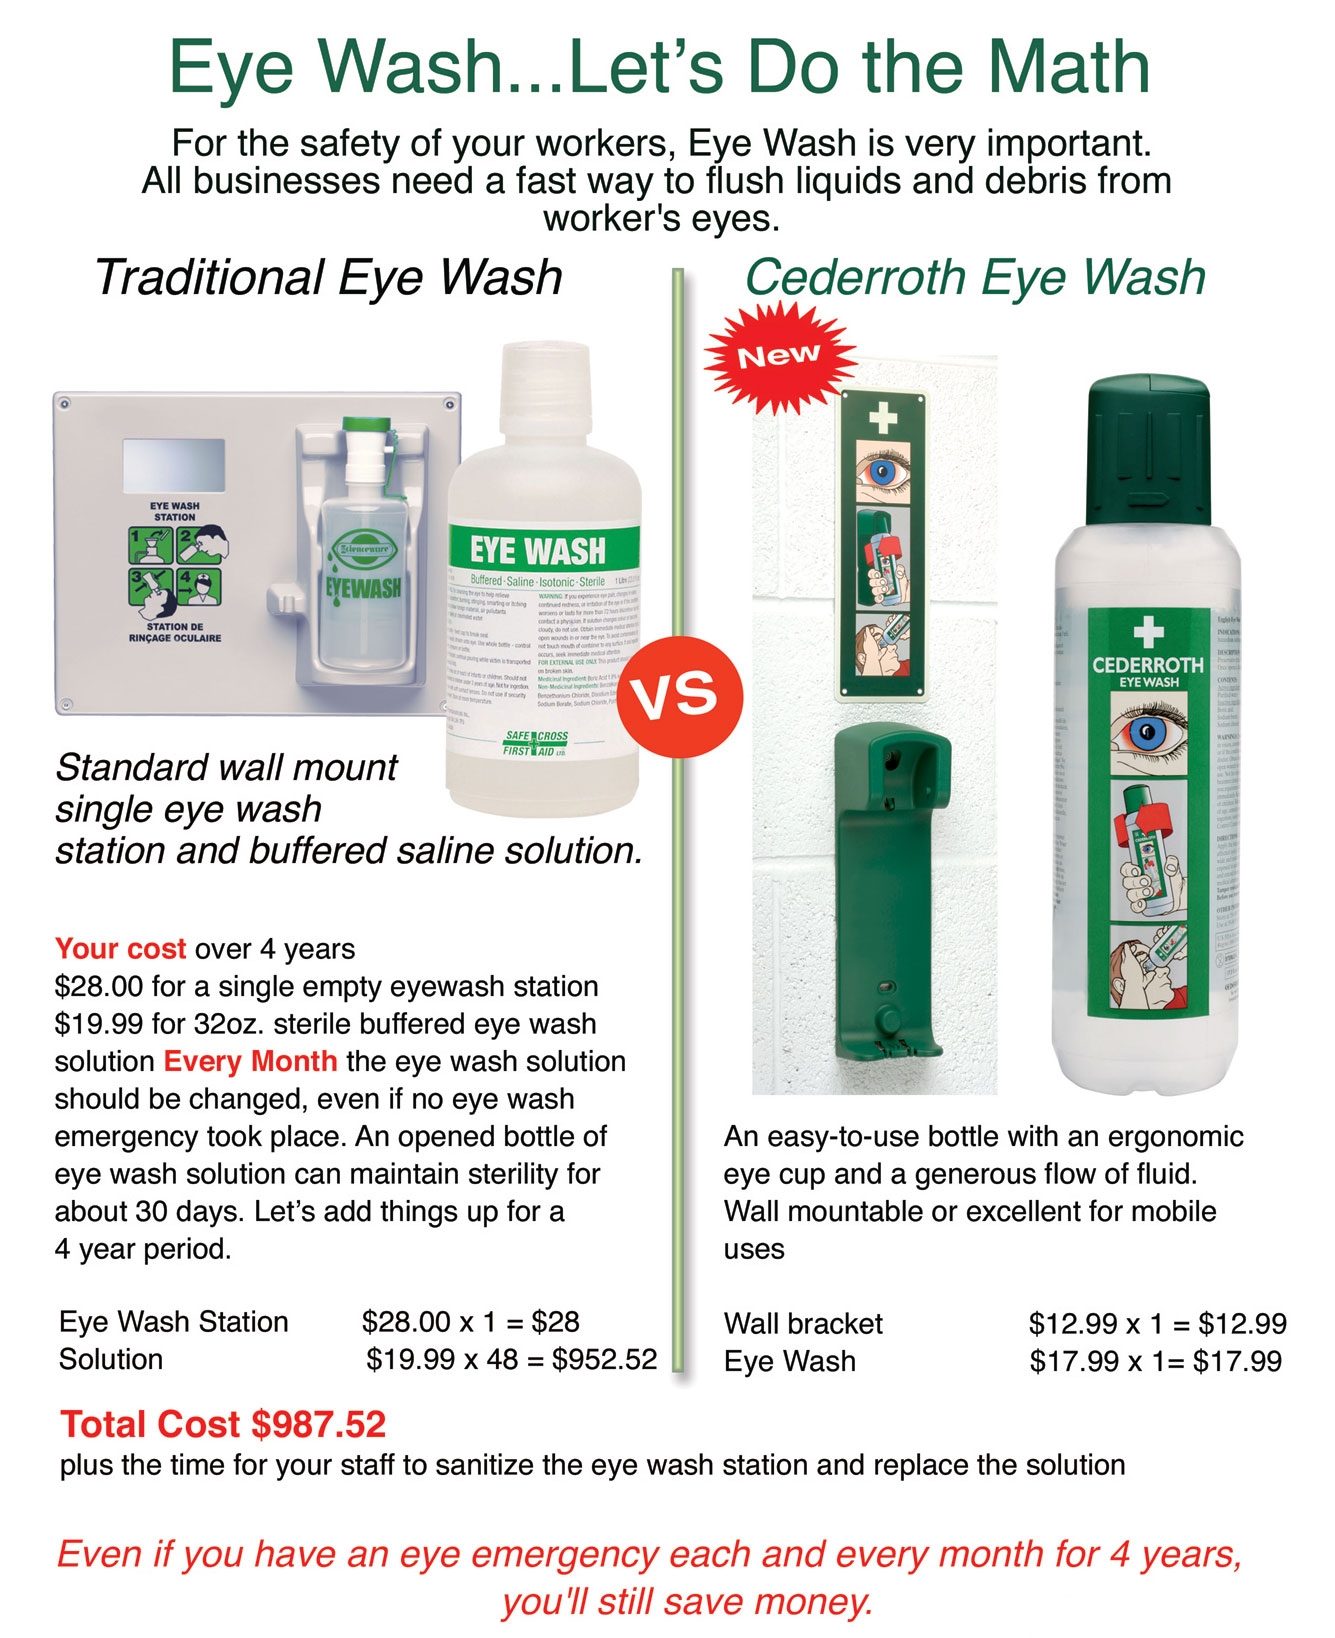 Cederroth vs tradition eye wash